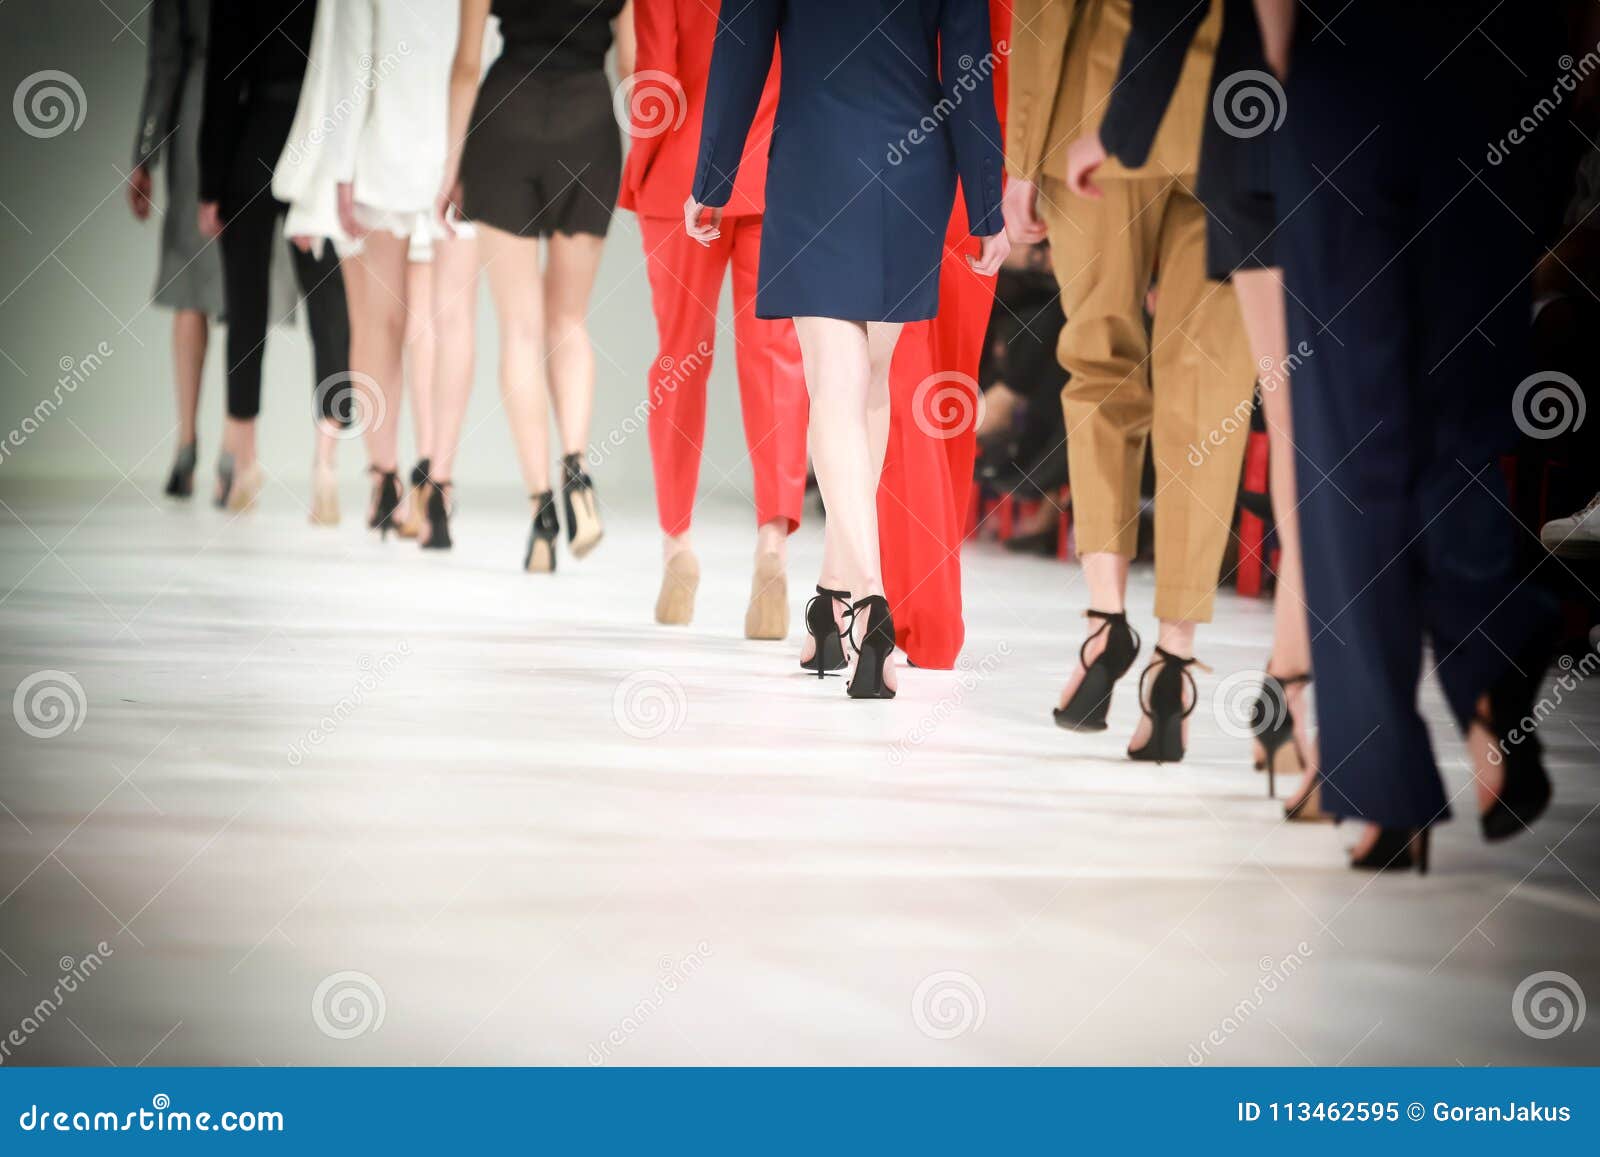 high heels fashion show